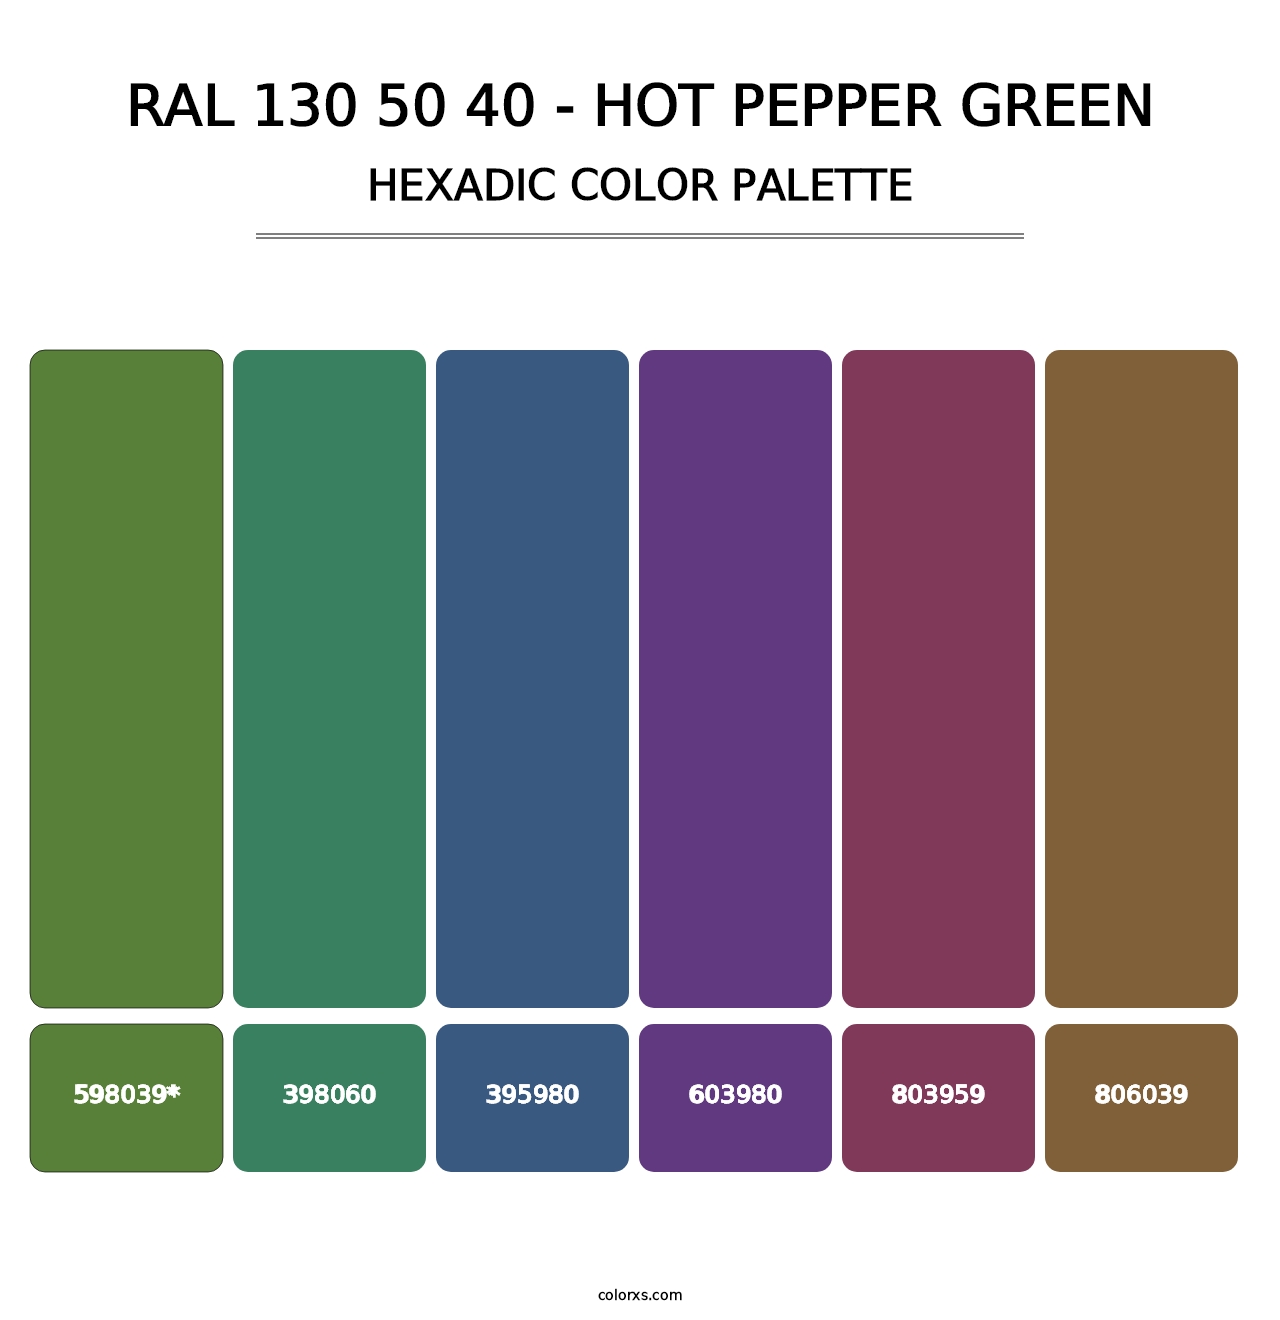 RAL 130 50 40 - Hot Pepper Green - Hexadic Color Palette